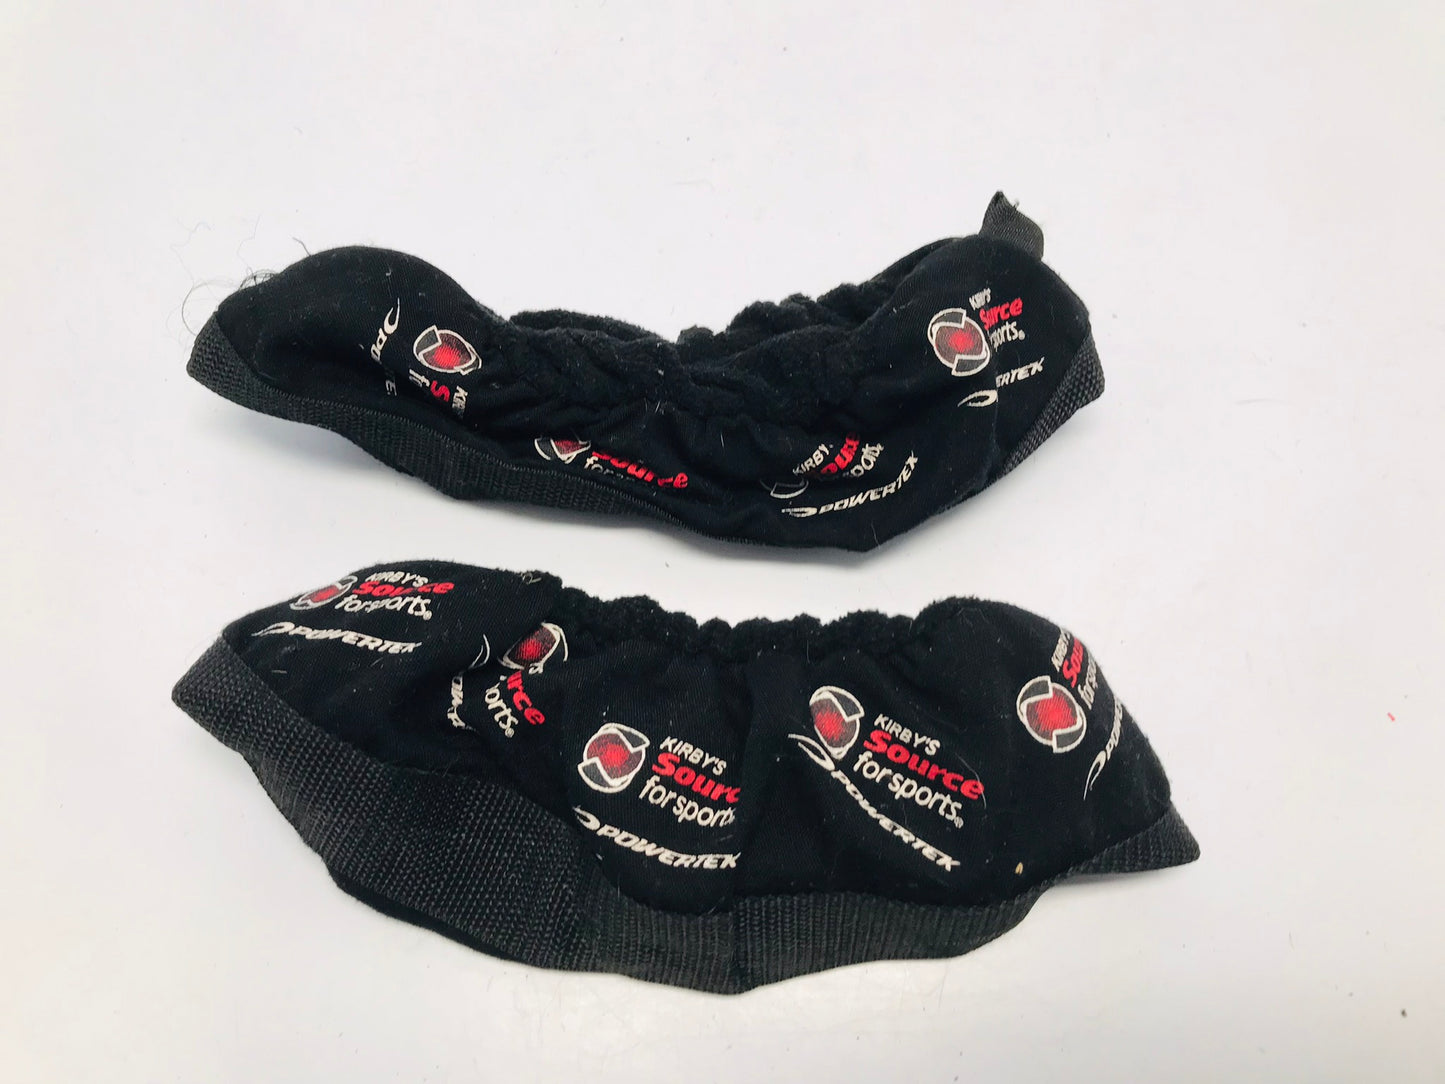 Hockey Skate Guards Black Terri Cloth Kirbies PowerTek Child Shoe Size 1-5